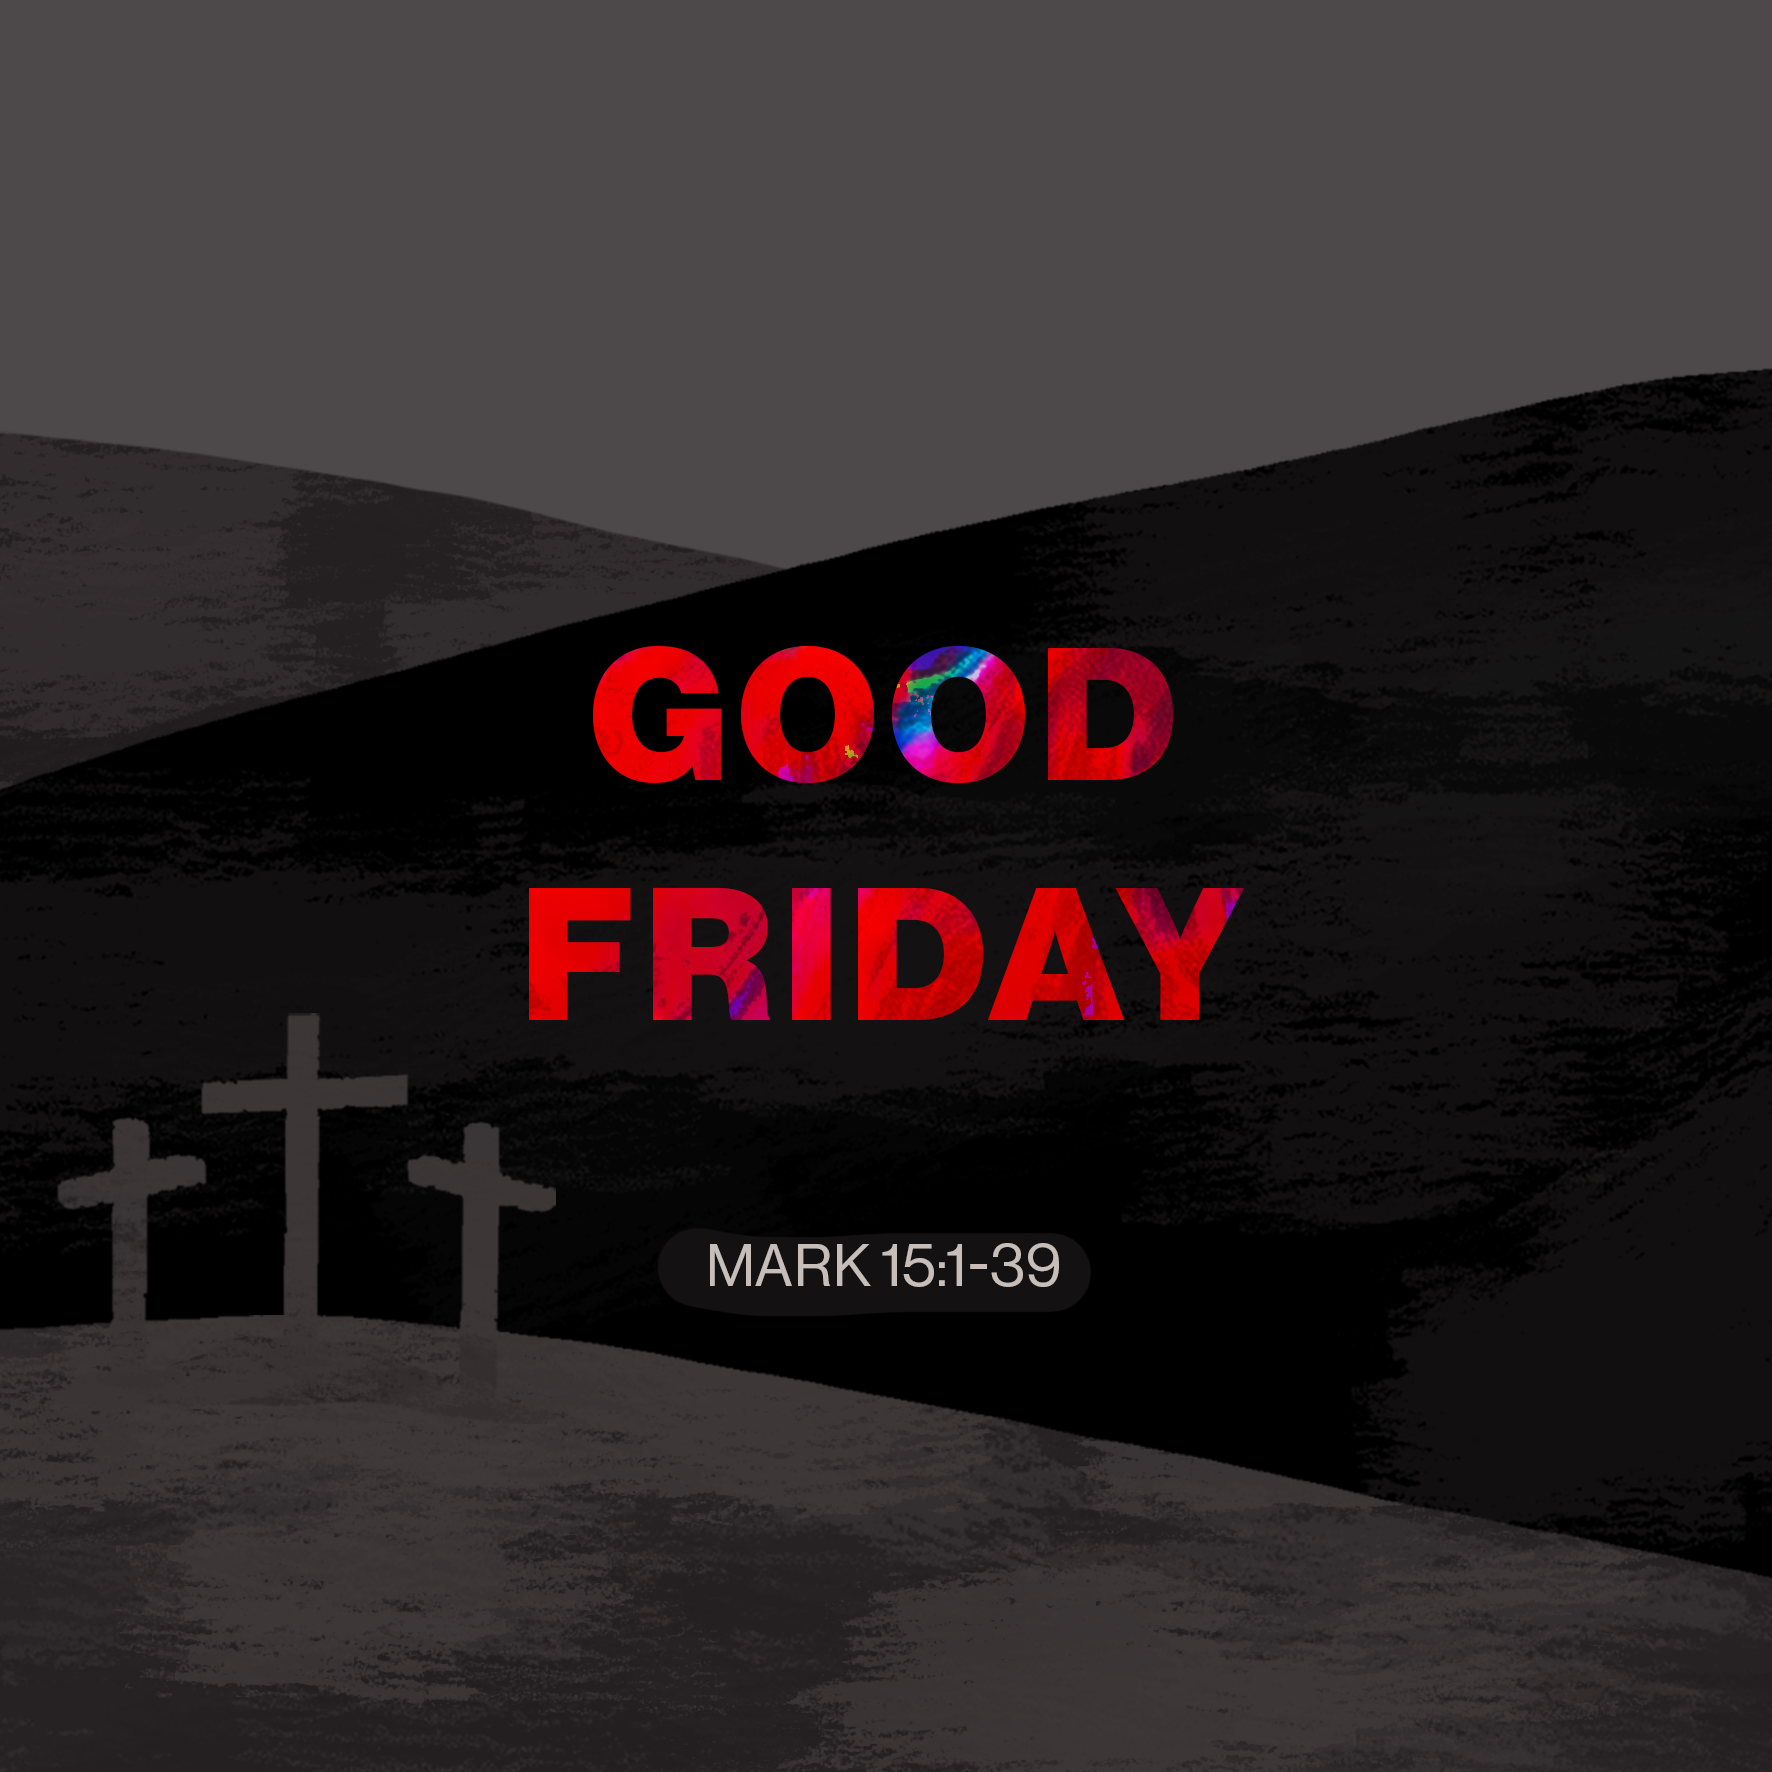 Good Friday (Mark 15:1-39)